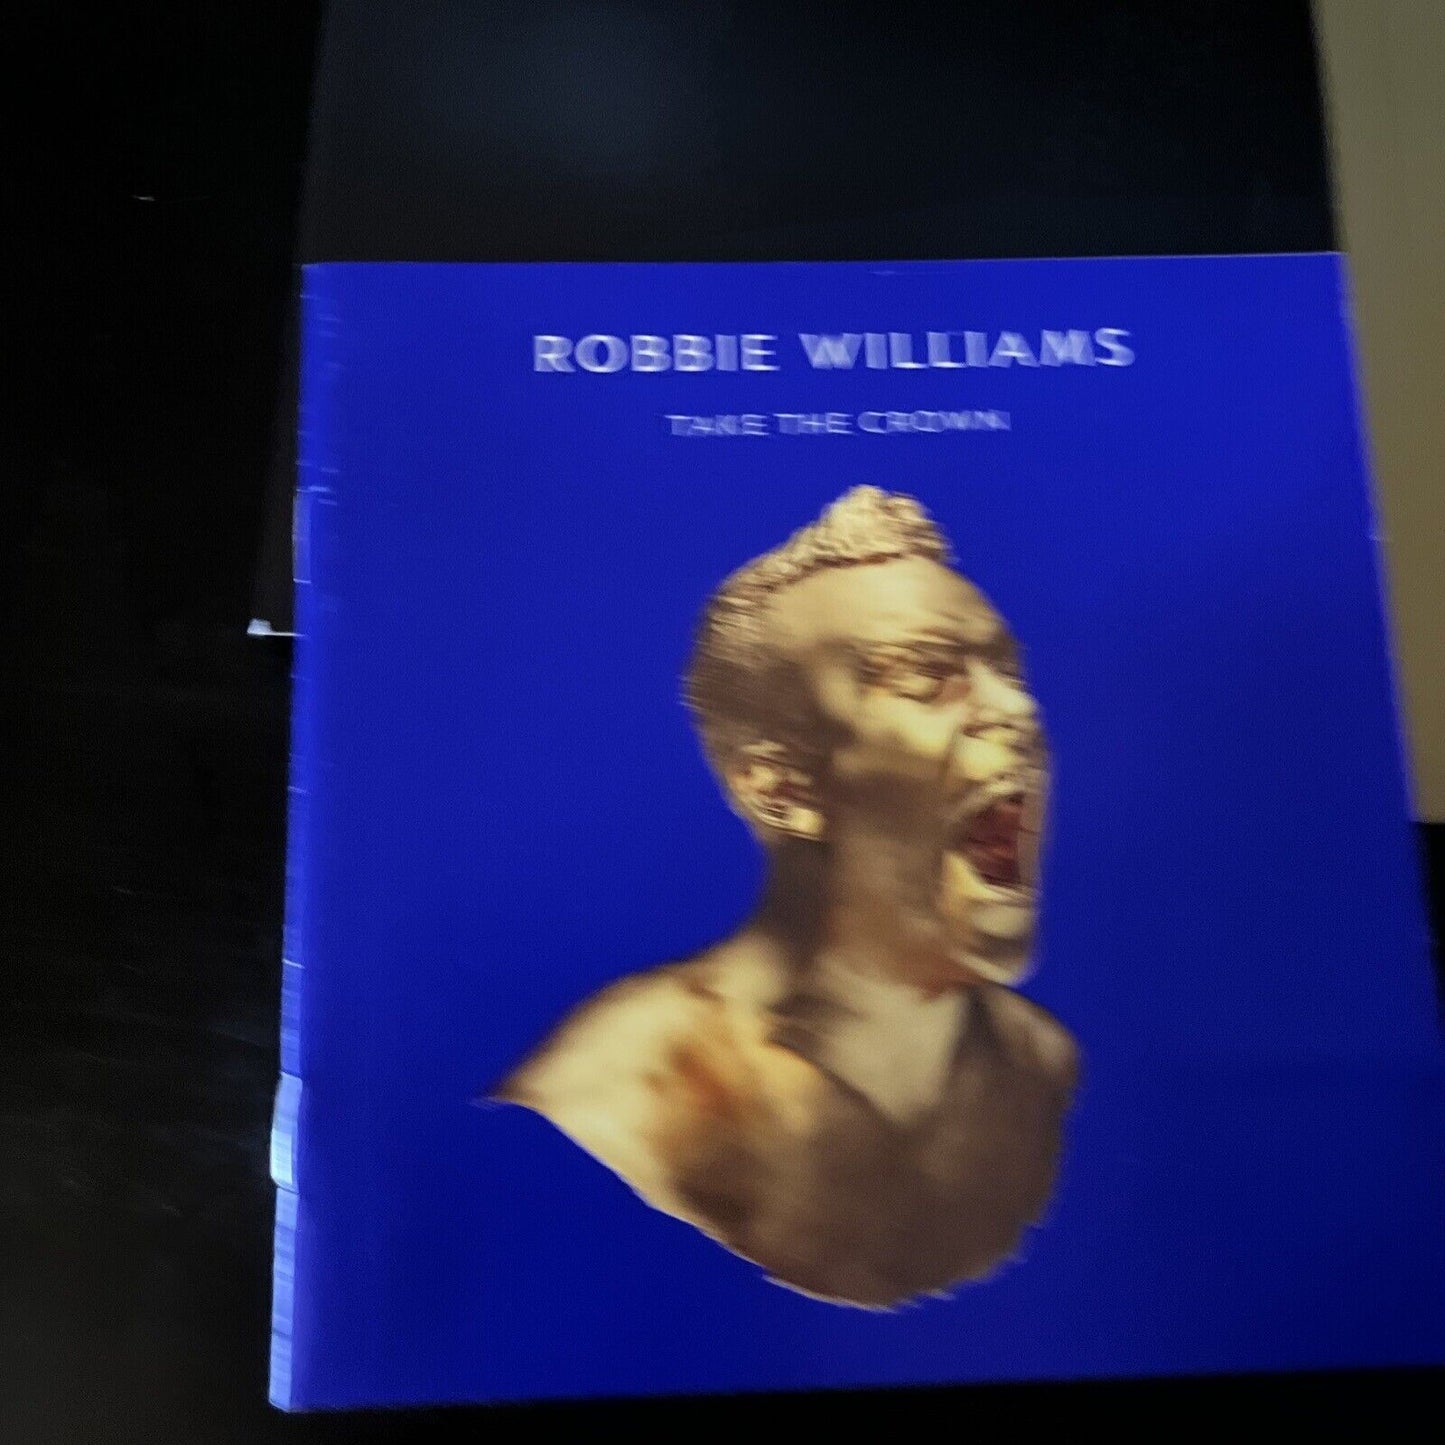 Robbie Williams - Take the Crown (DVD + CD, 2012) All Regions